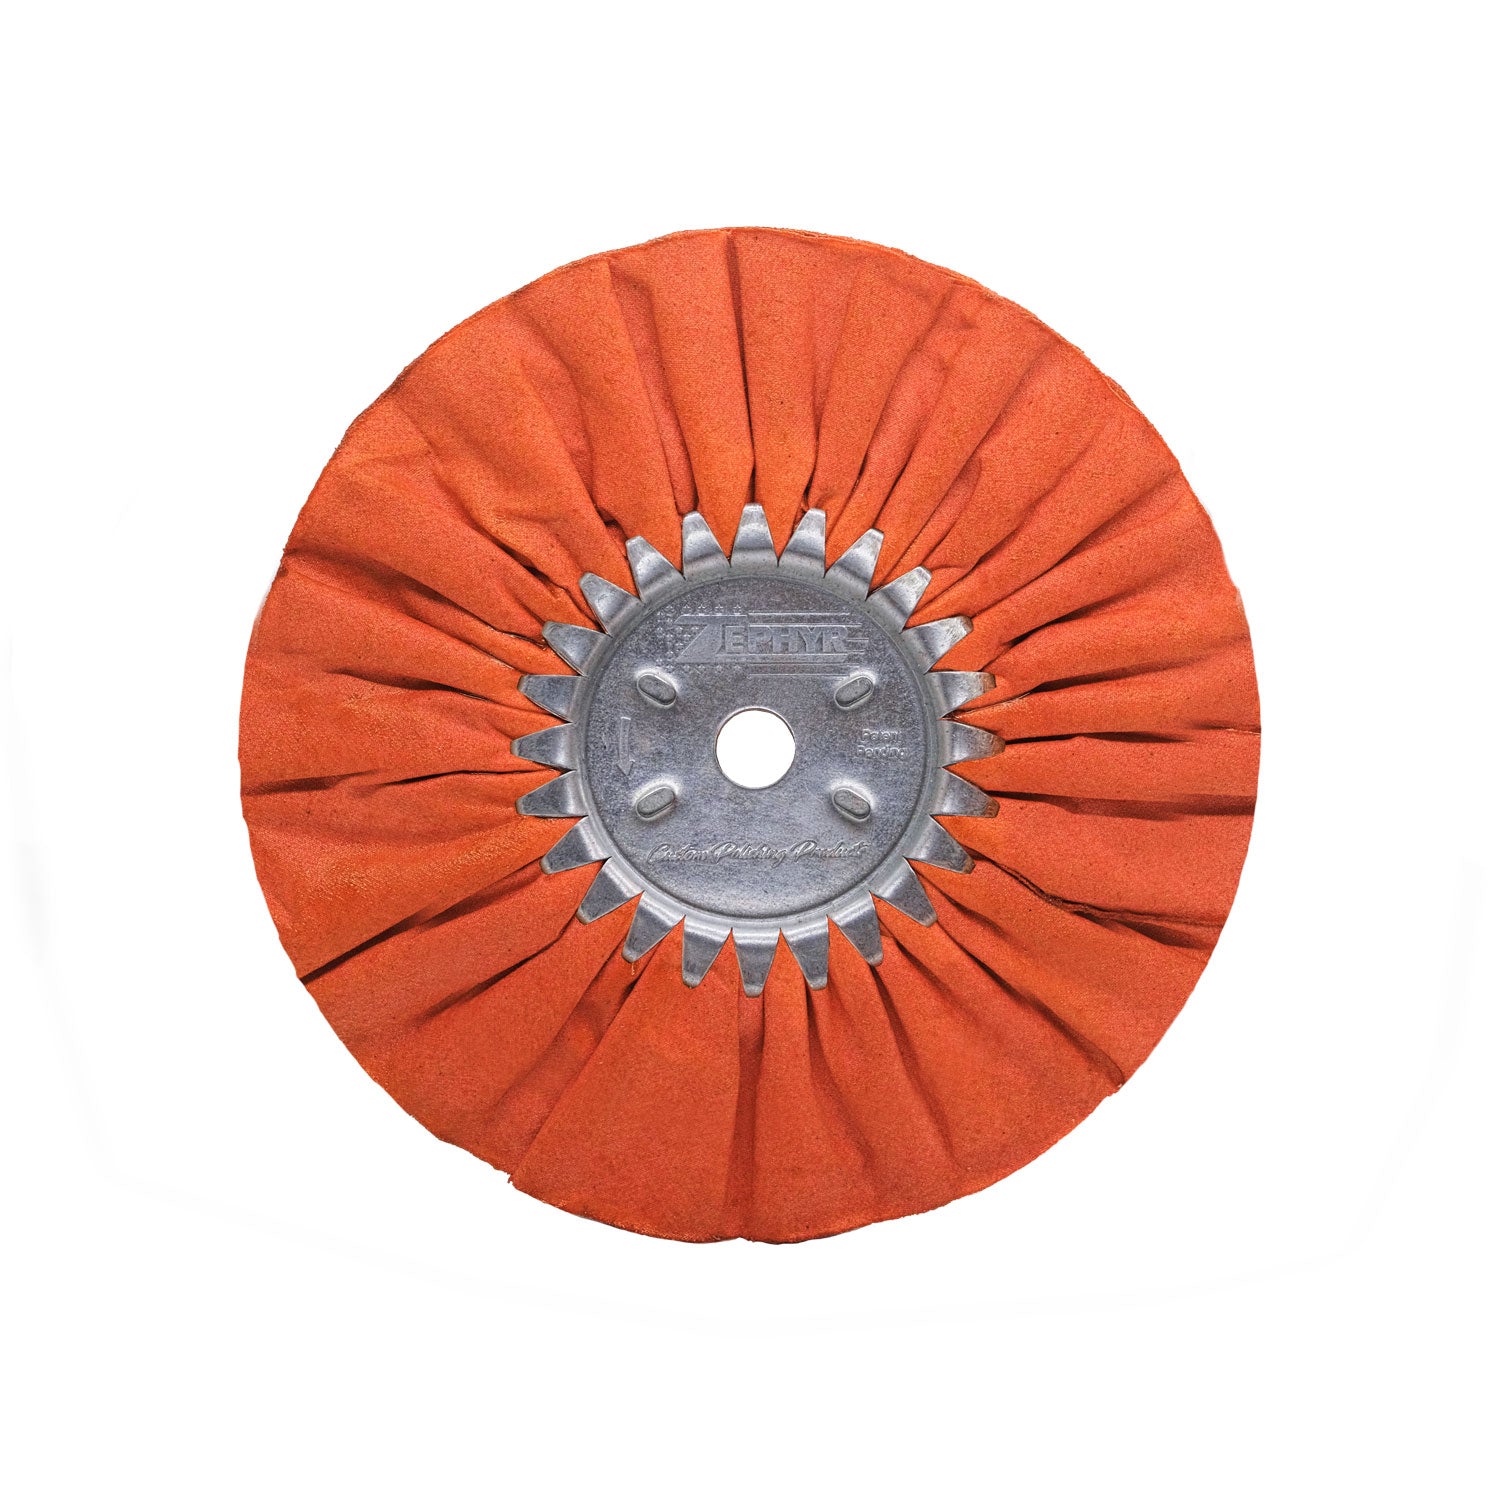 ANWTOTU anwtotu 5 pcs 6 inch polishing buffing wheel for drill